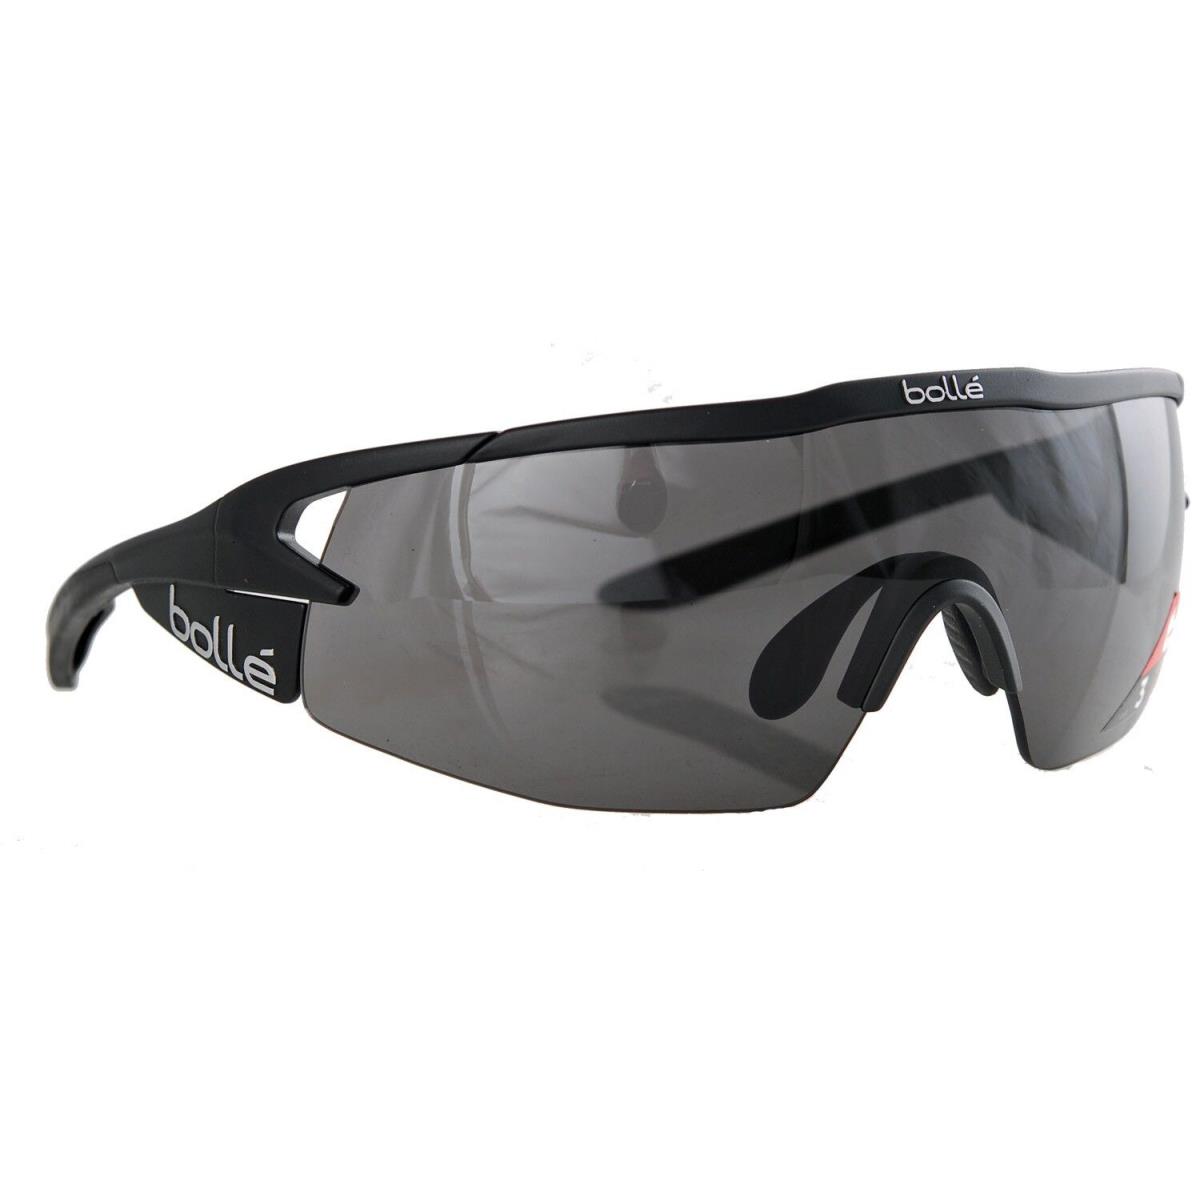 Bolle sunglasses  - Smoke , Black Frame, Grey Lens